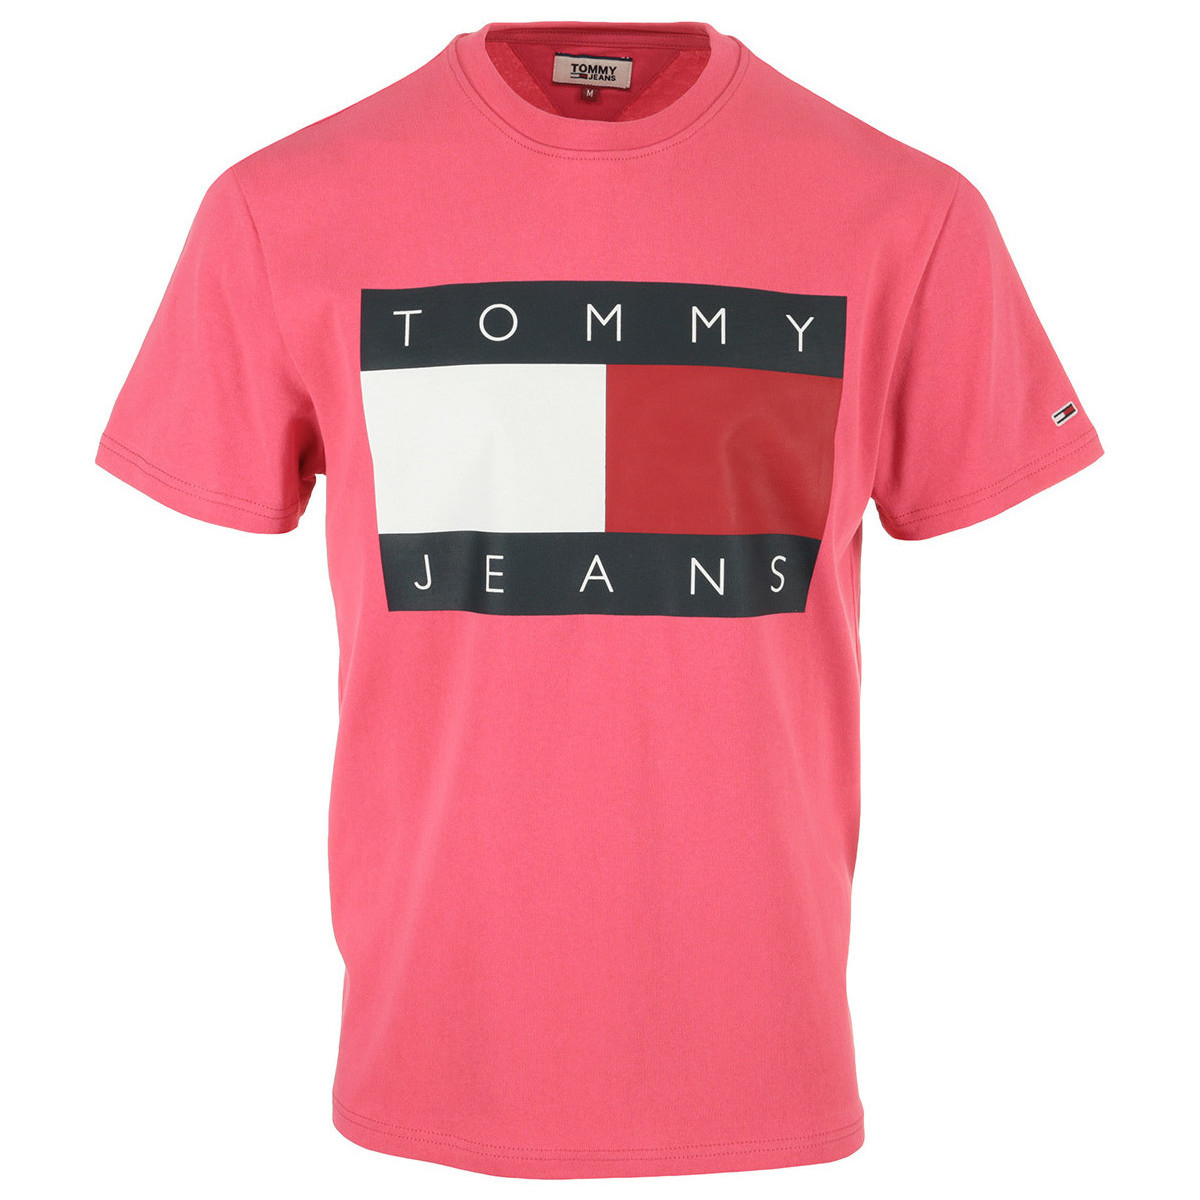 Textiel Heren T-shirts korte mouwen Tommy Hilfiger Tommy Flag Tee Roze